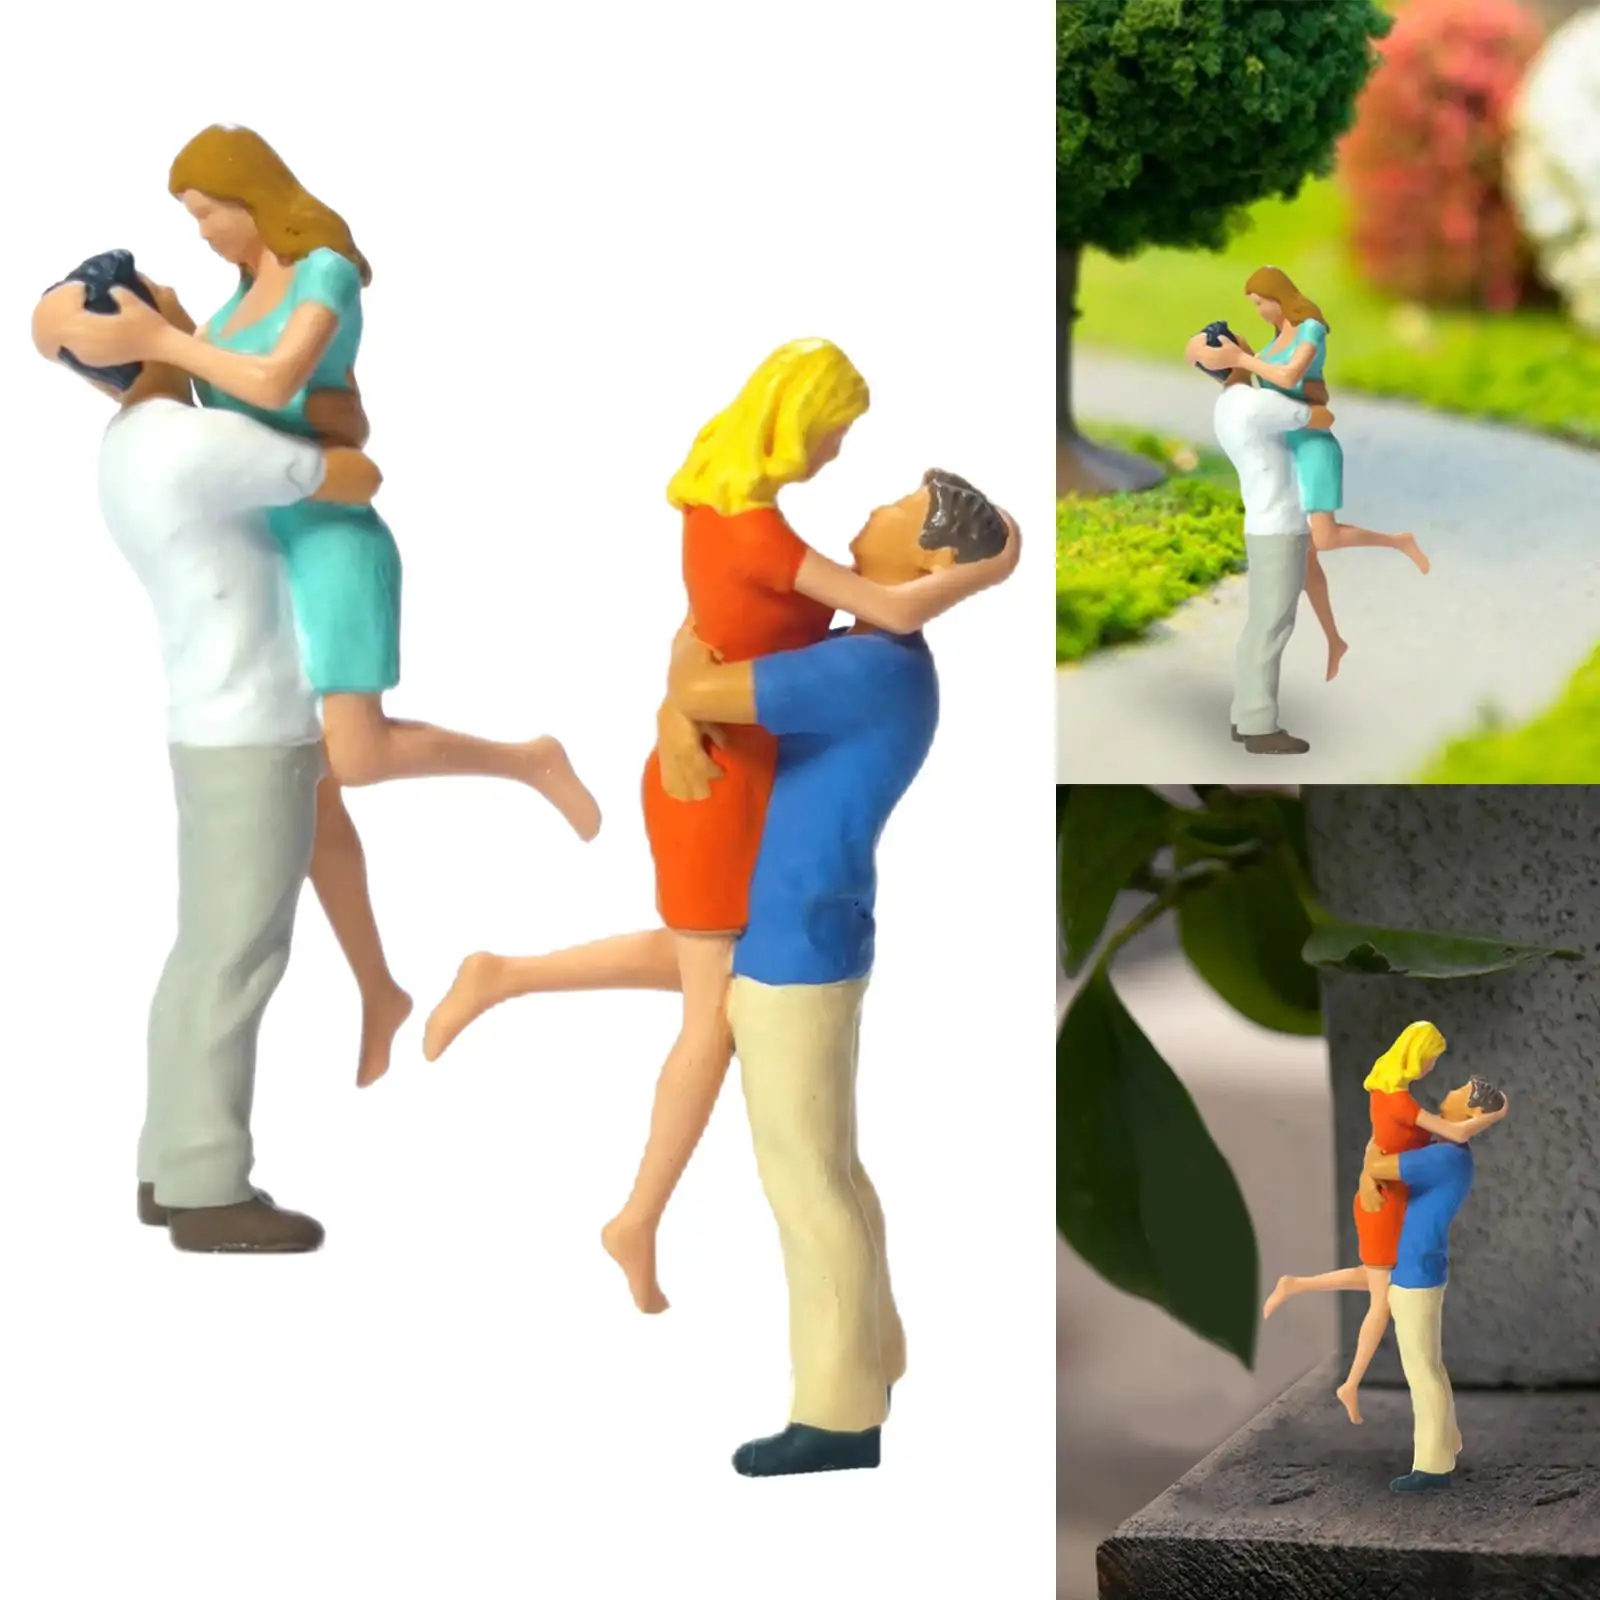 Resin 1/64 Hugging Couple Model Figure Tiny People Model Model Trains People Figures for Scenery Landscape Dollhouse Decor